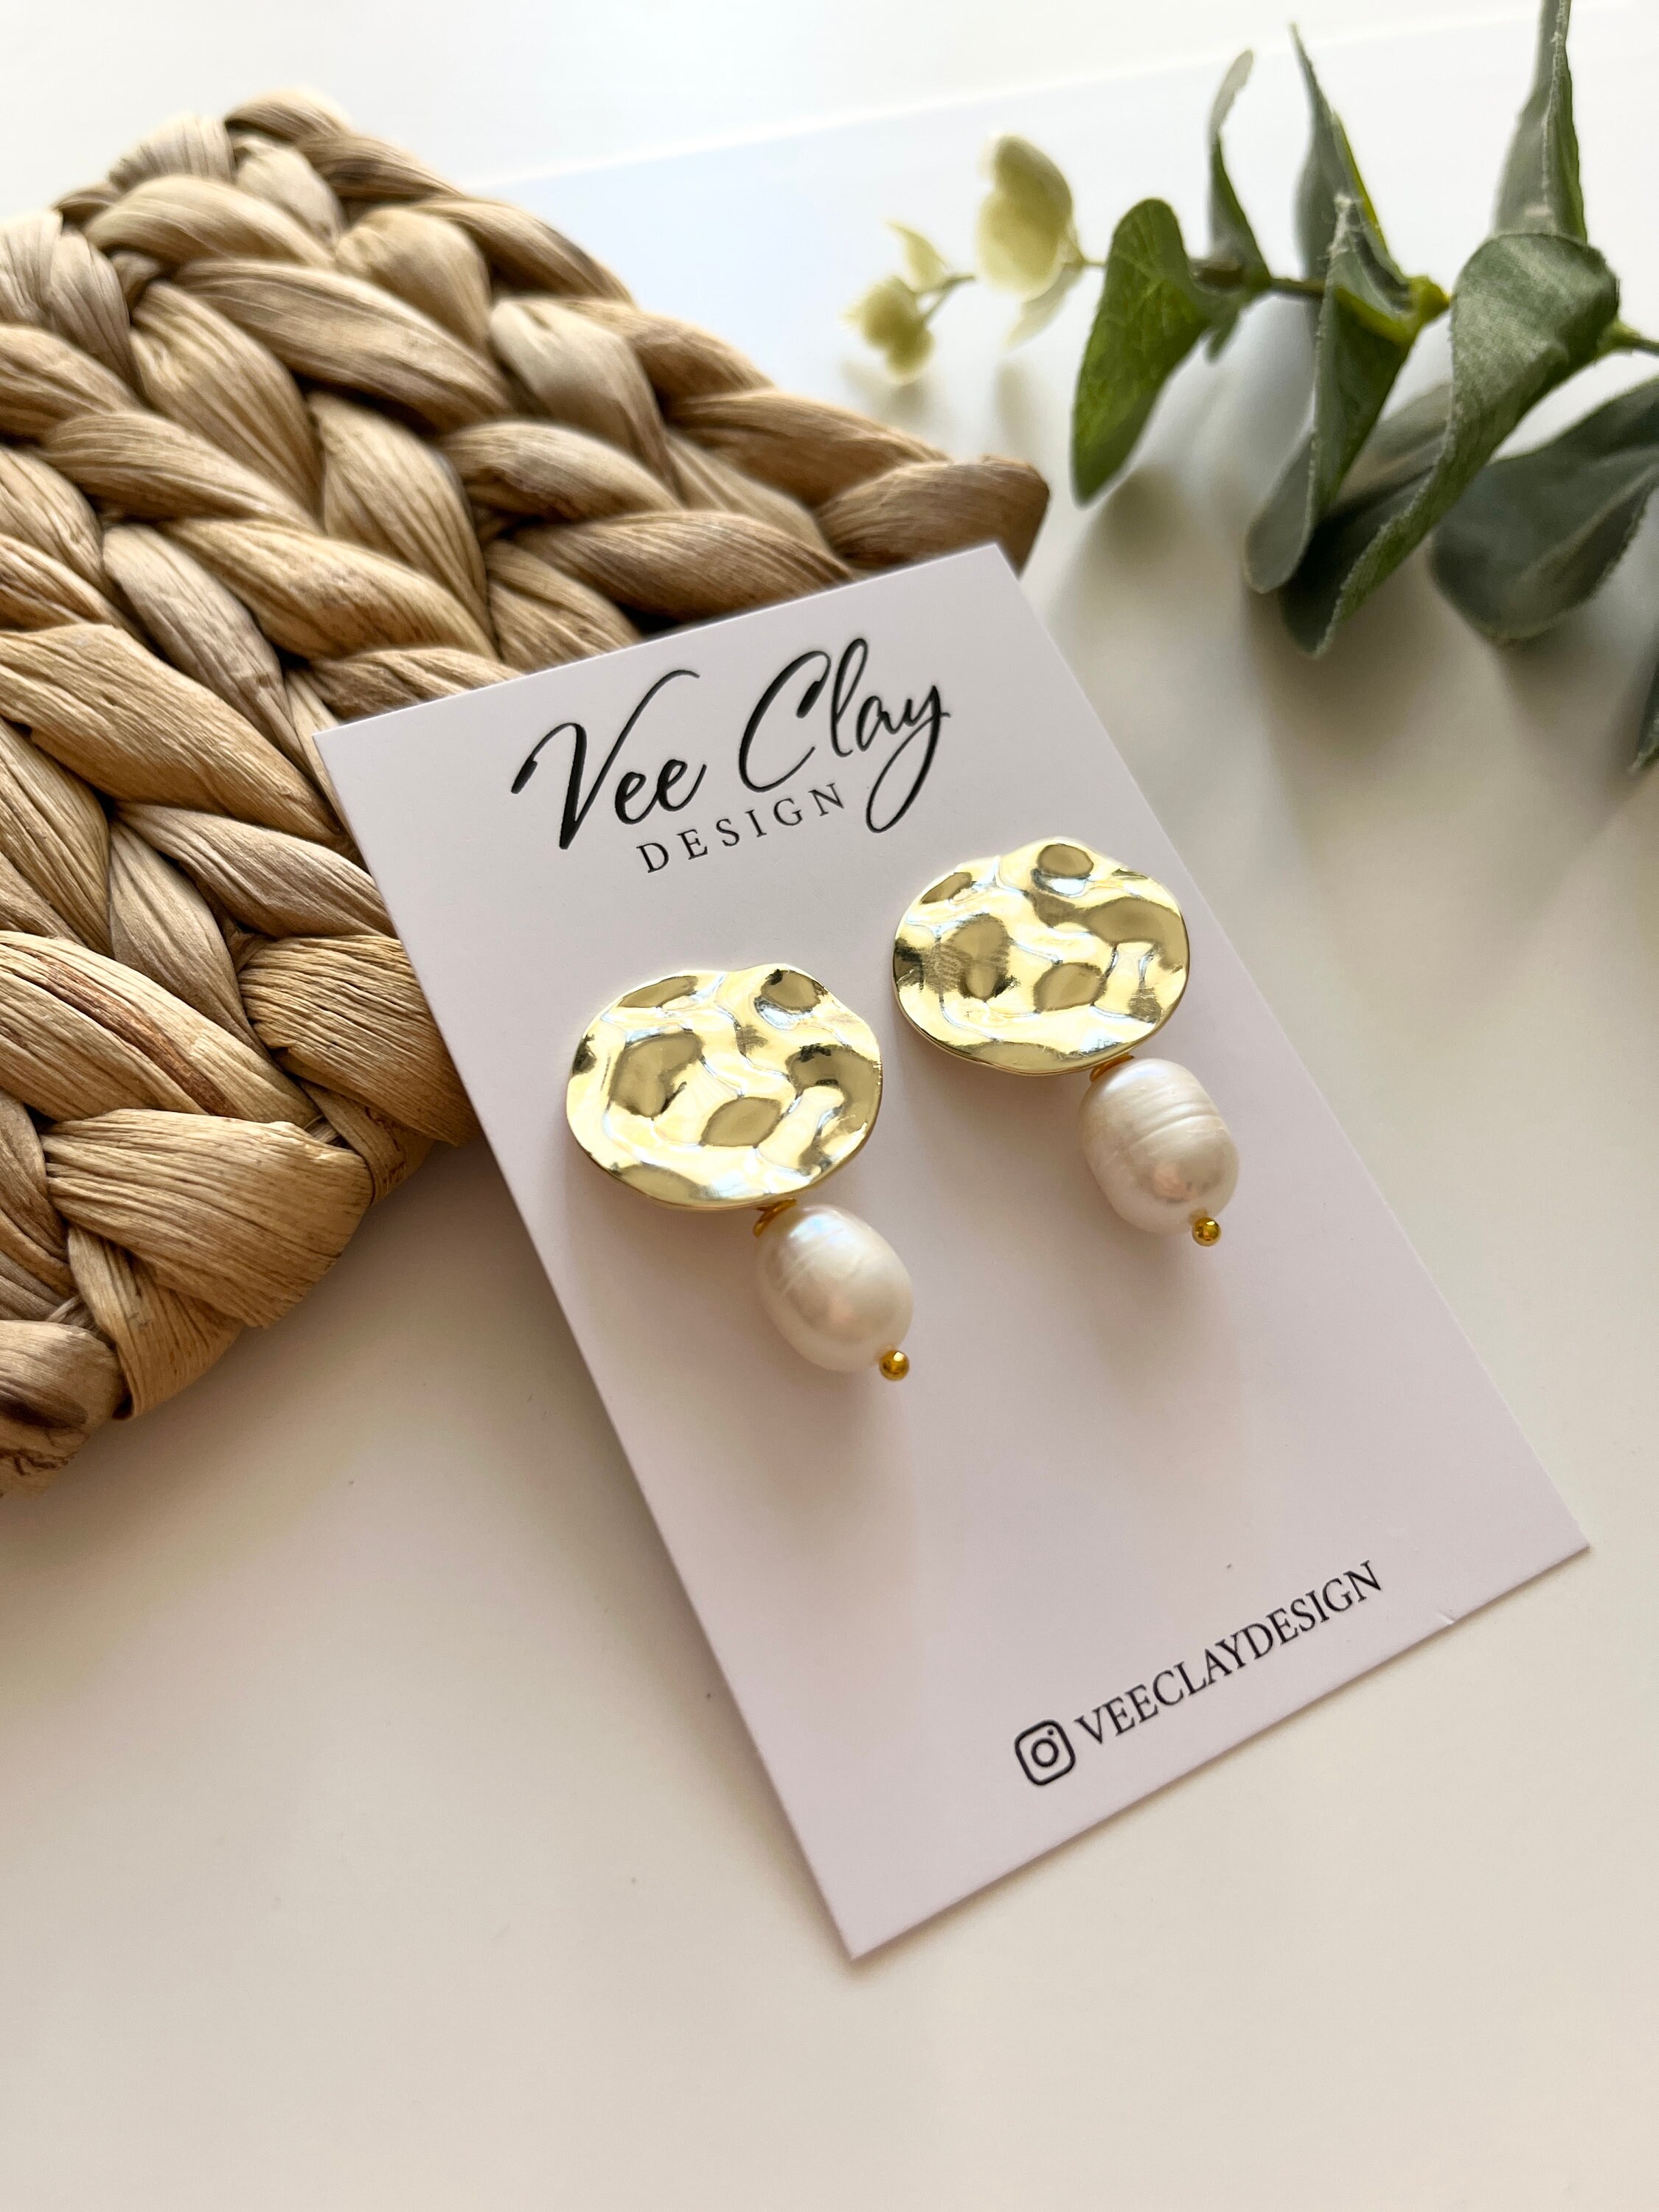 Large Pearl Earring[?] Botanical Earrings[?]Polymer Clay Earrings[?]statement Earrings[?]Floral[?]Handmade[?]Lightweight